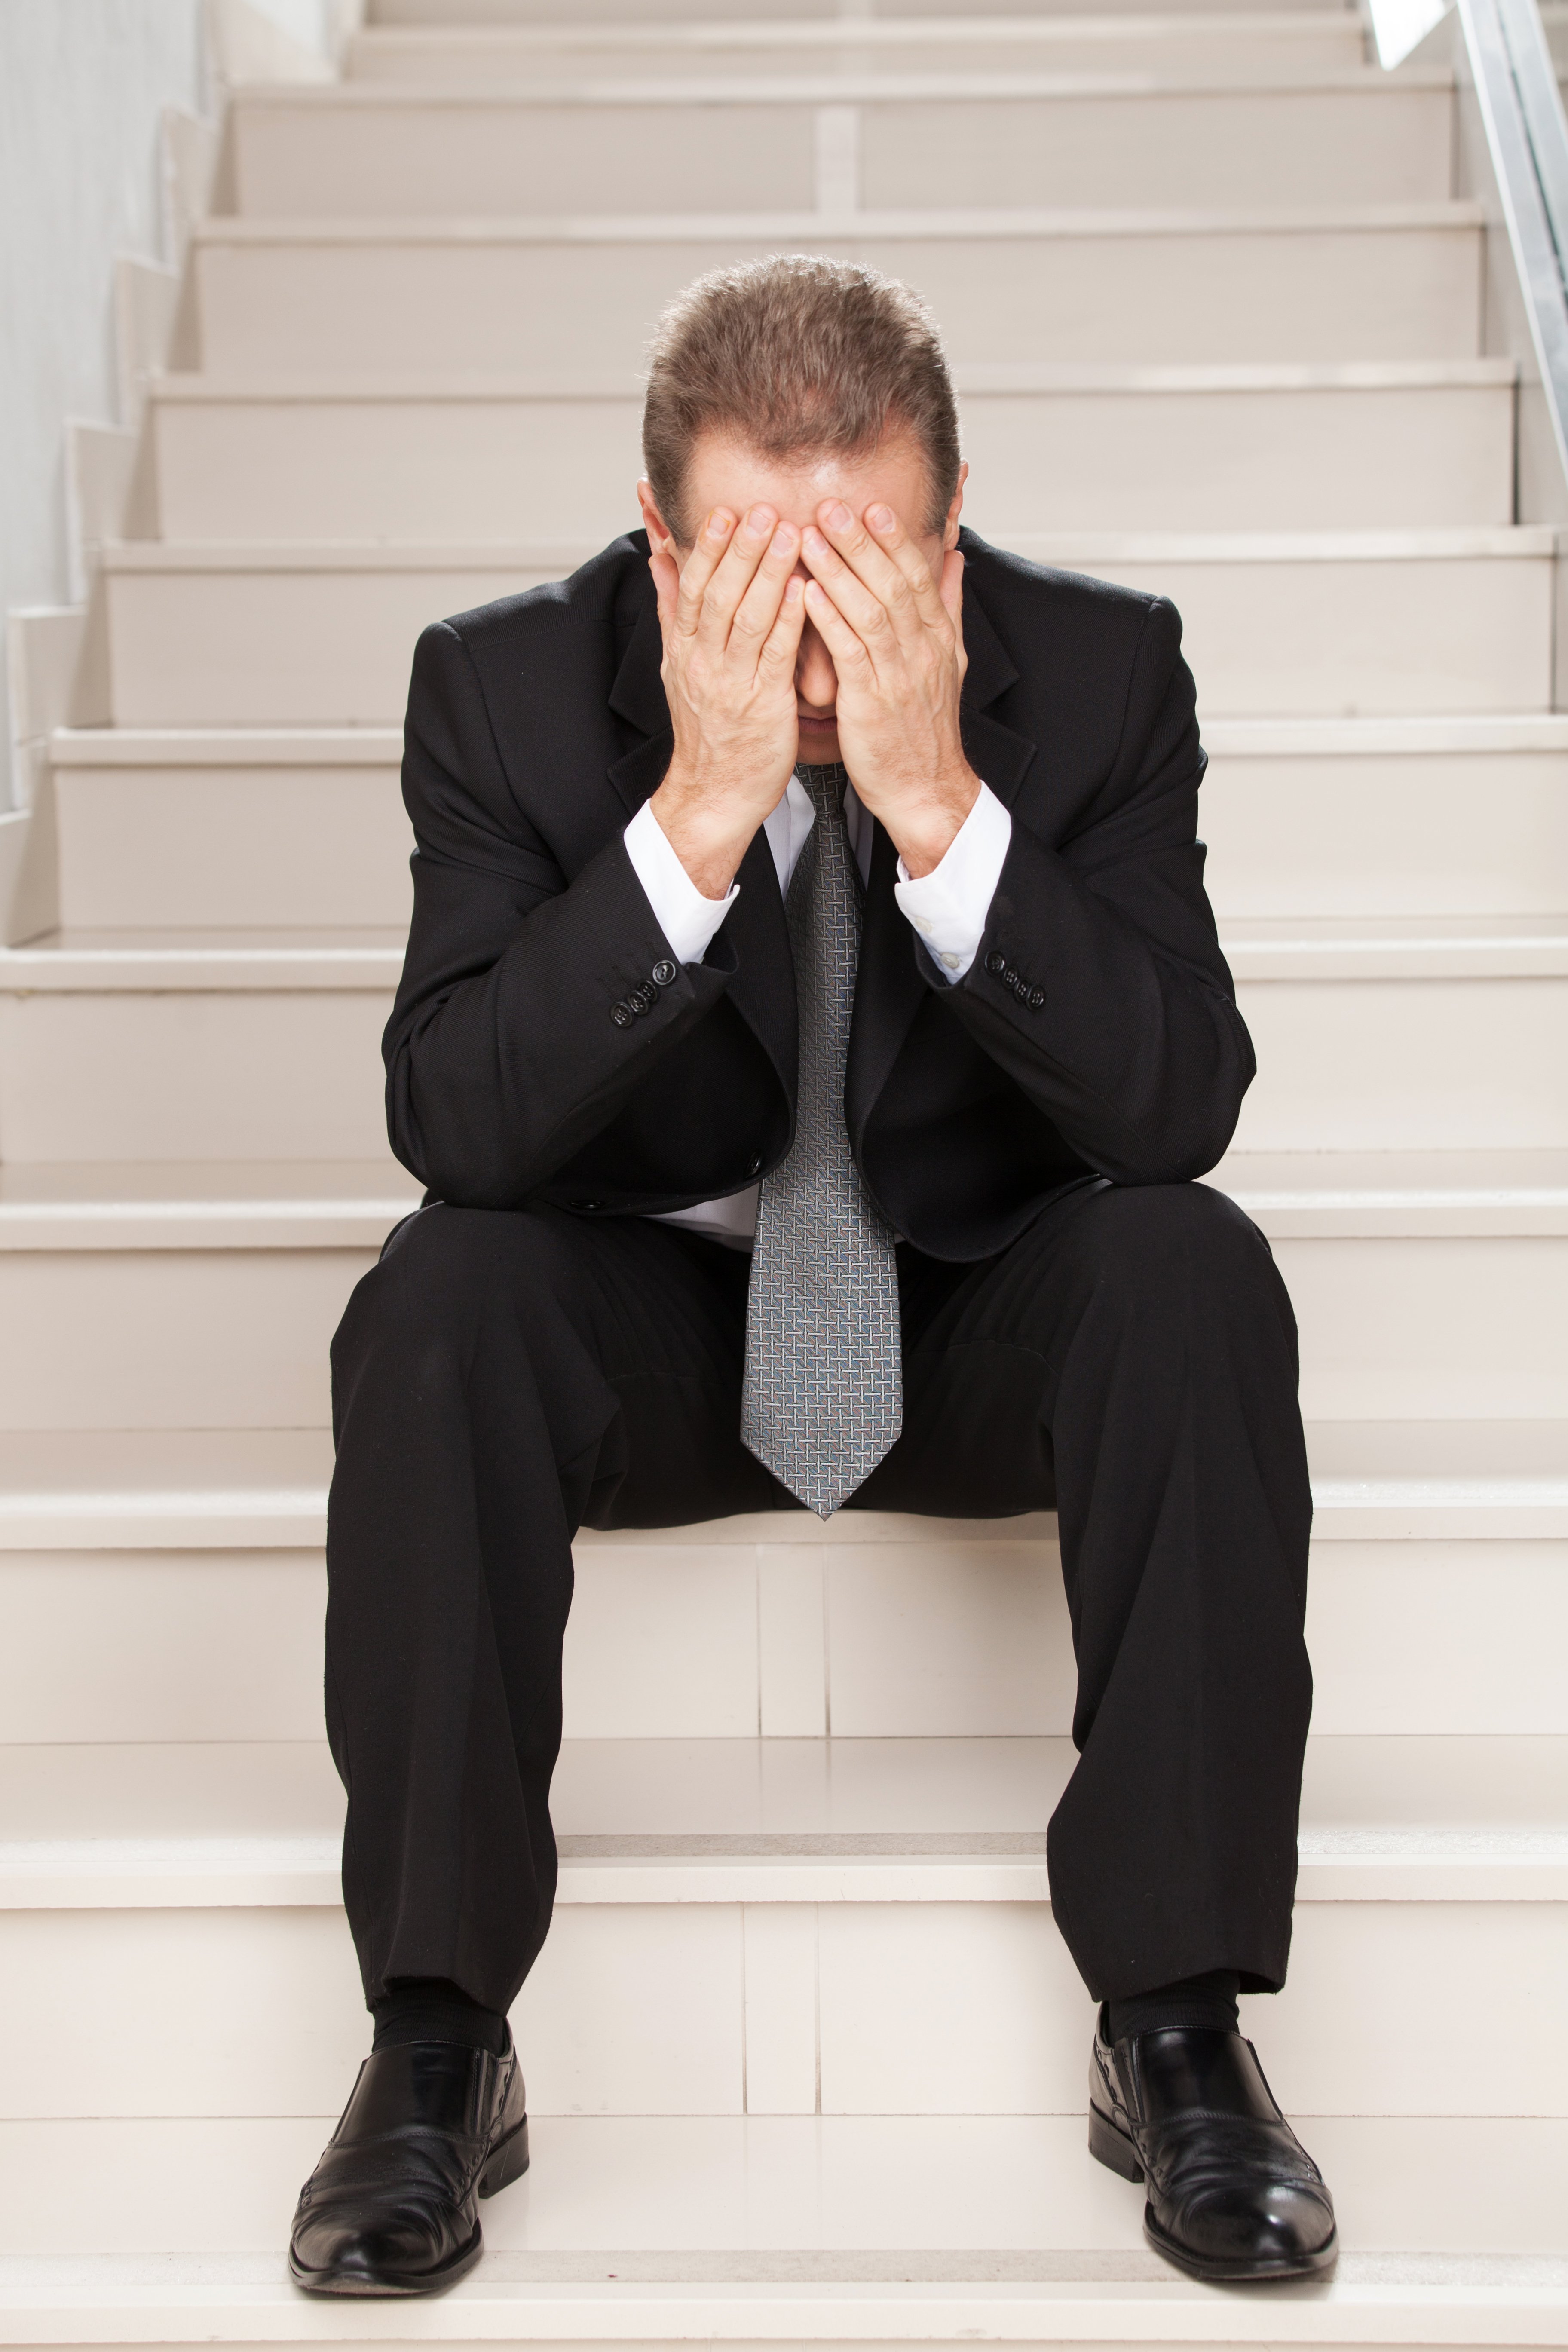 Hombre deprimido en oficina. | Foto: Shutterstock